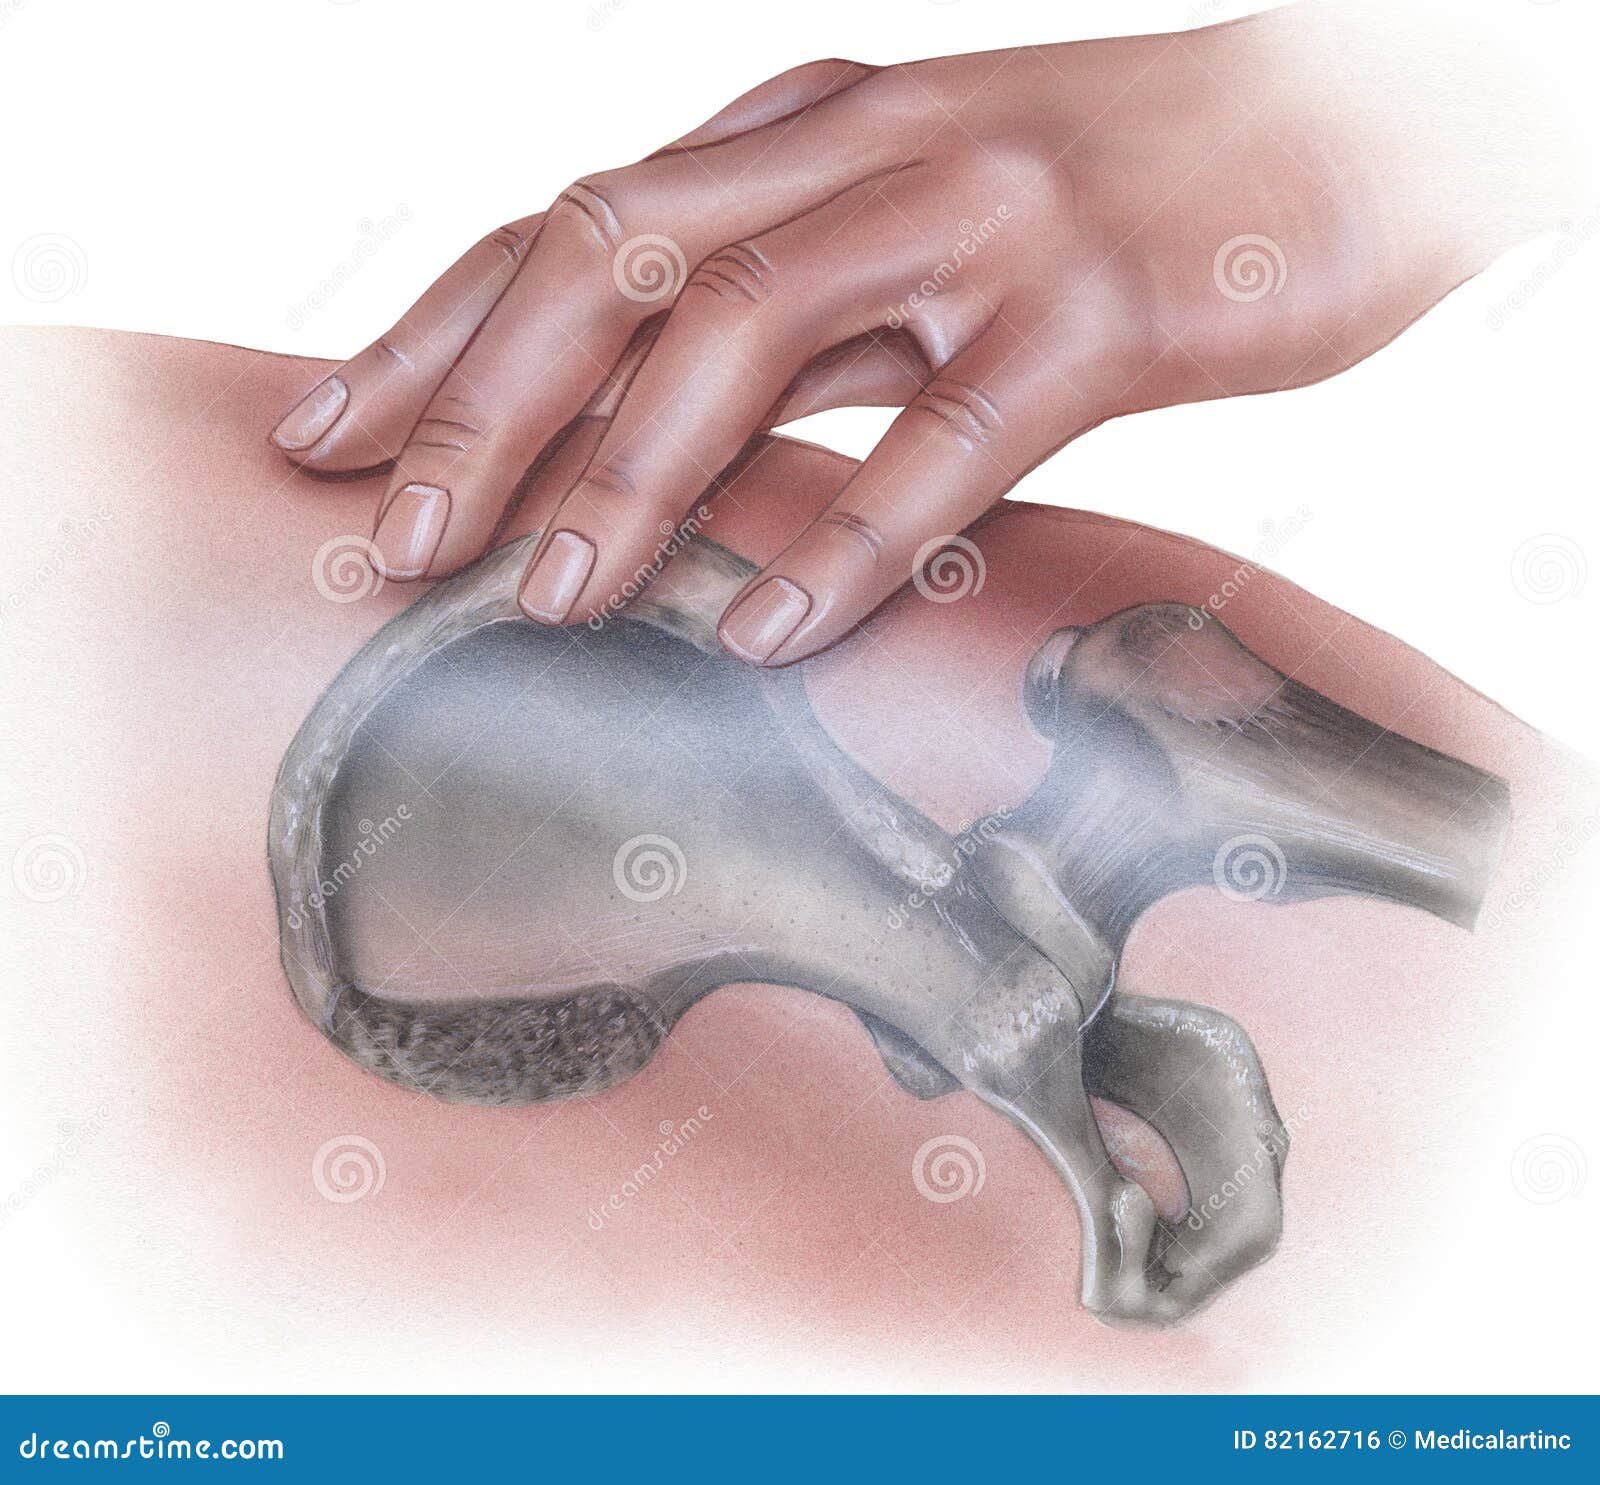 hip - hand applying pressure on bone